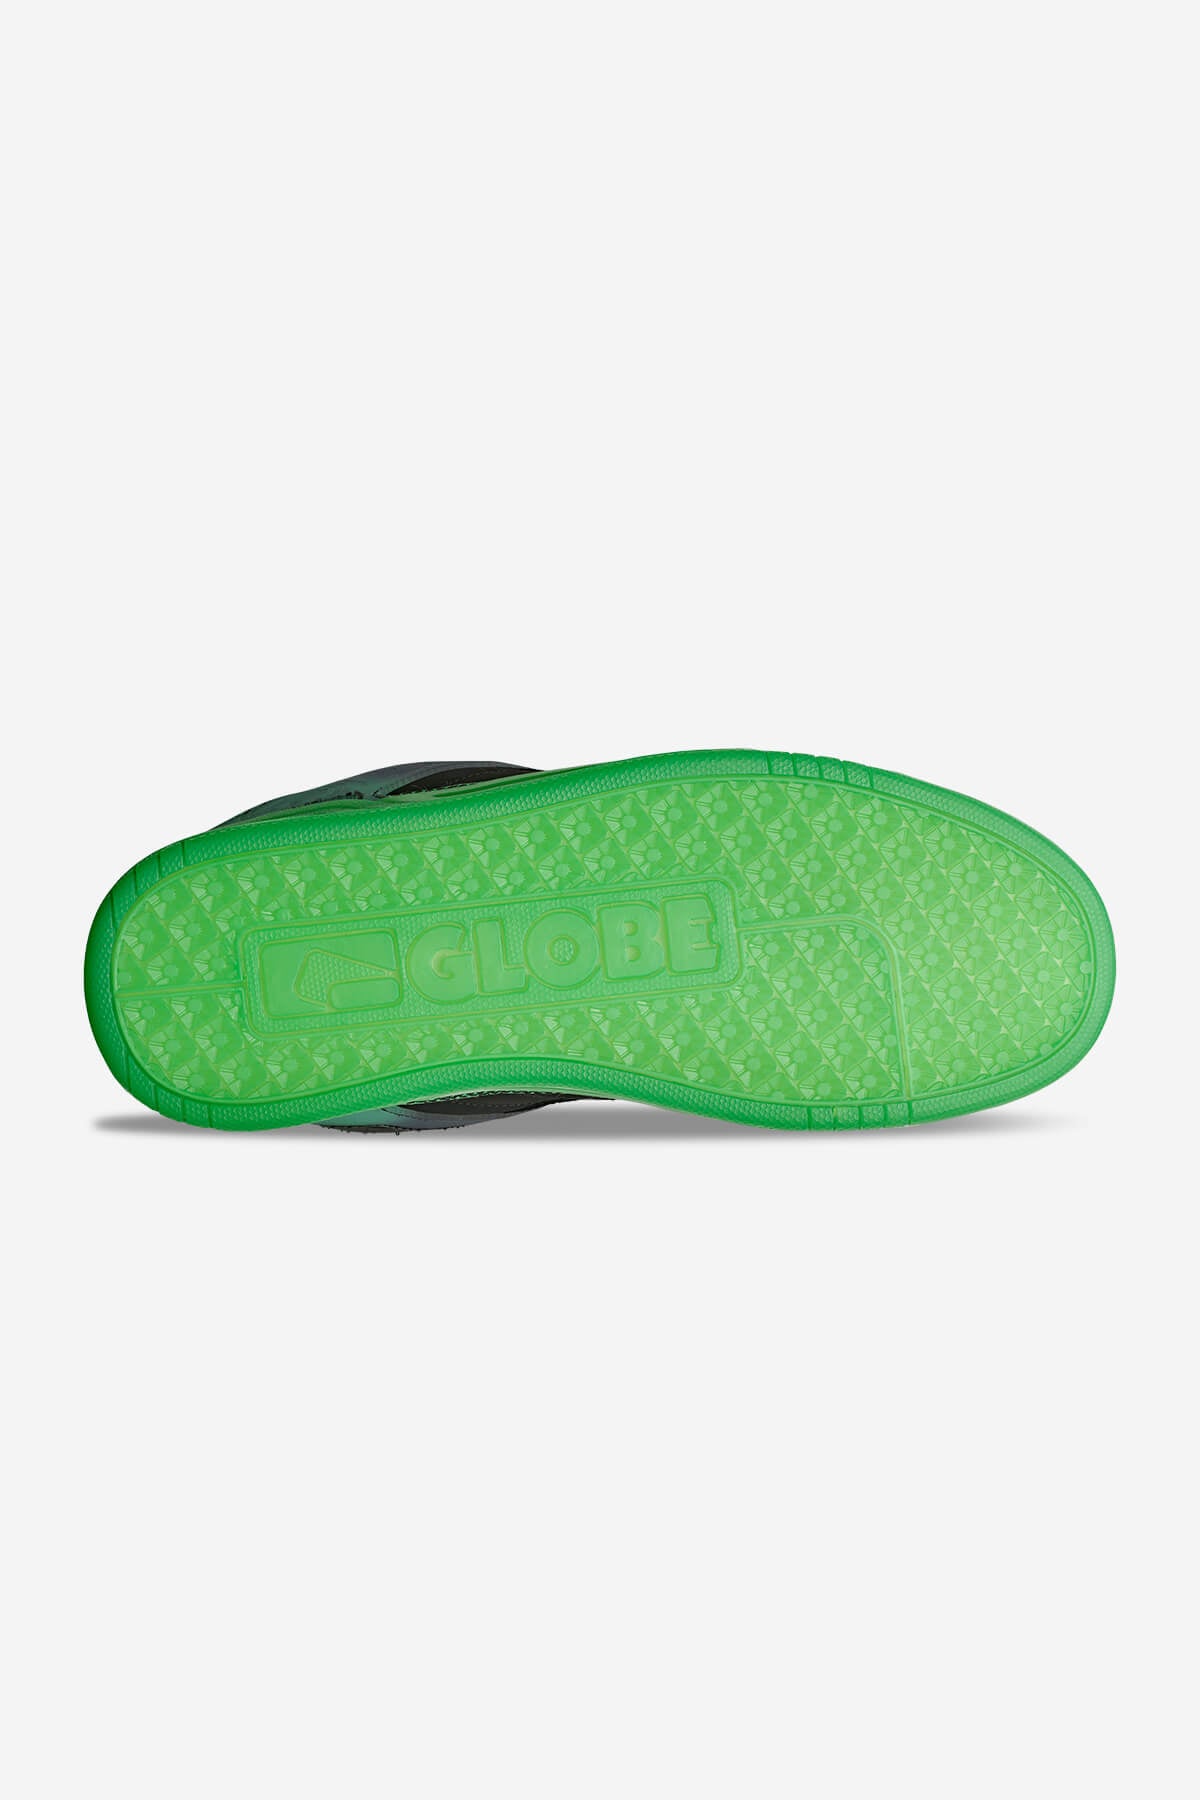 Globe Low shoes Tilt - Black/Green Stipple in Black/Green Stipple